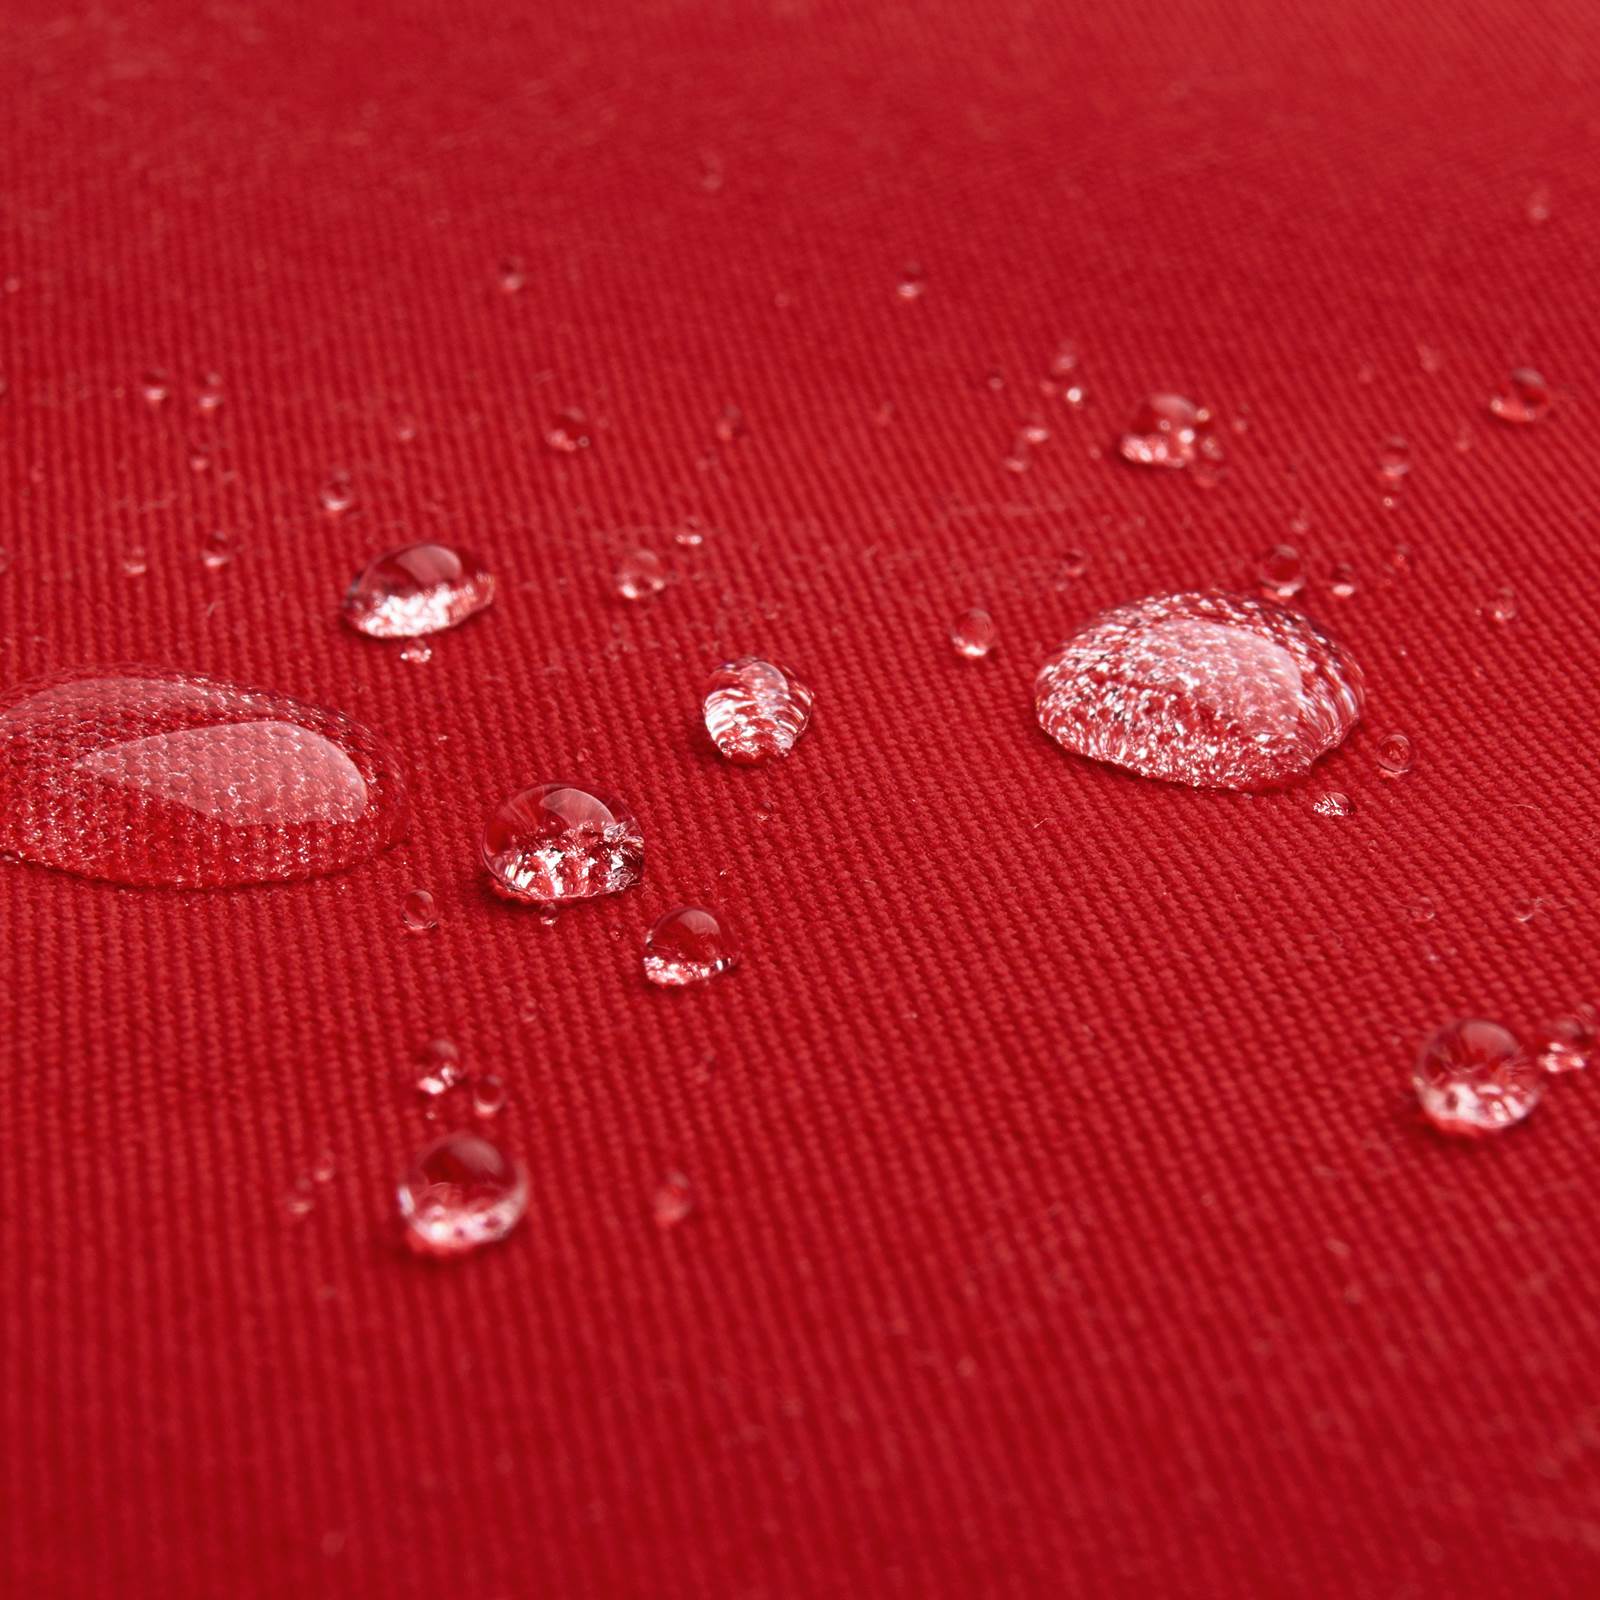 Olympic - Tela impermeable (rojo)